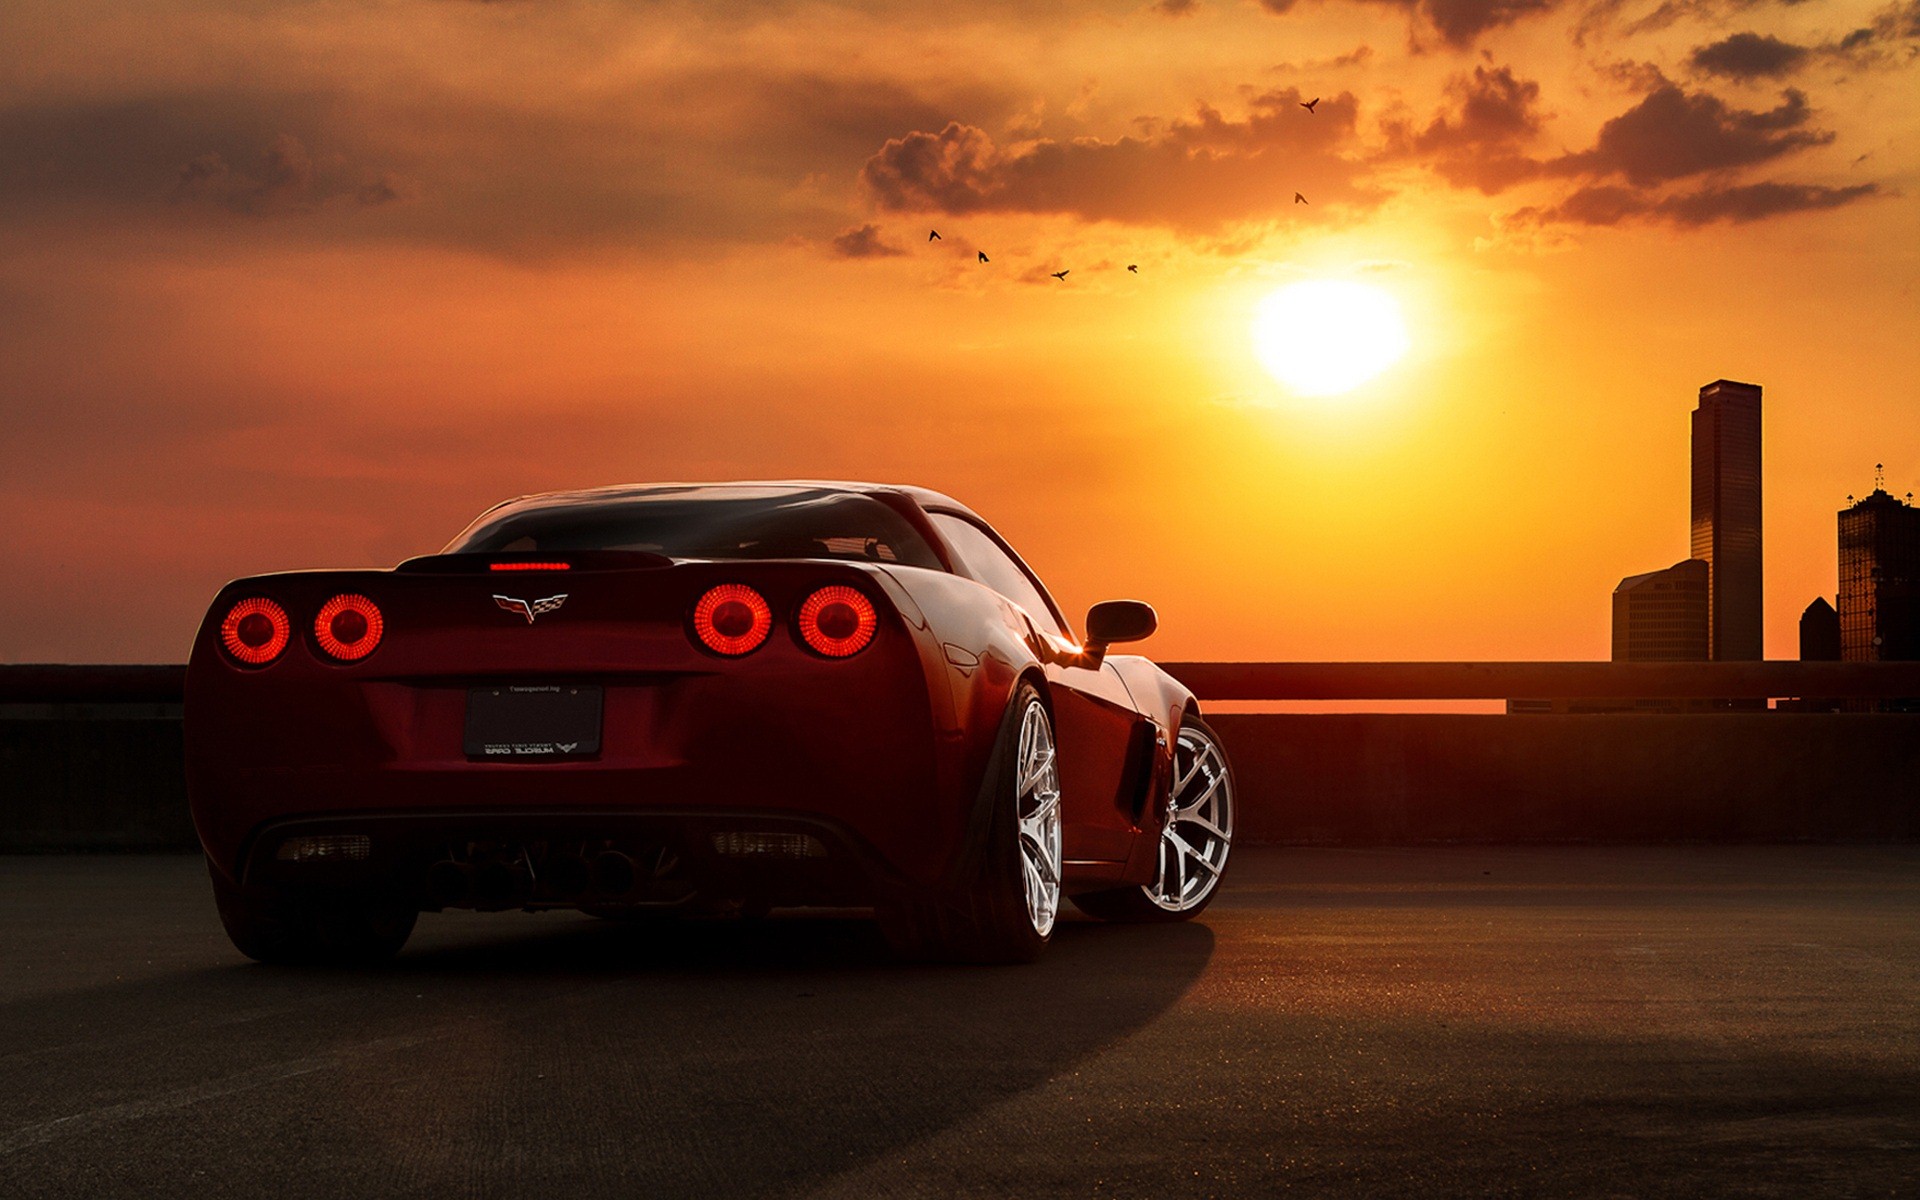 Red Chevrolet Corvette Car During Sunset Scene Photo | HD Famous ...